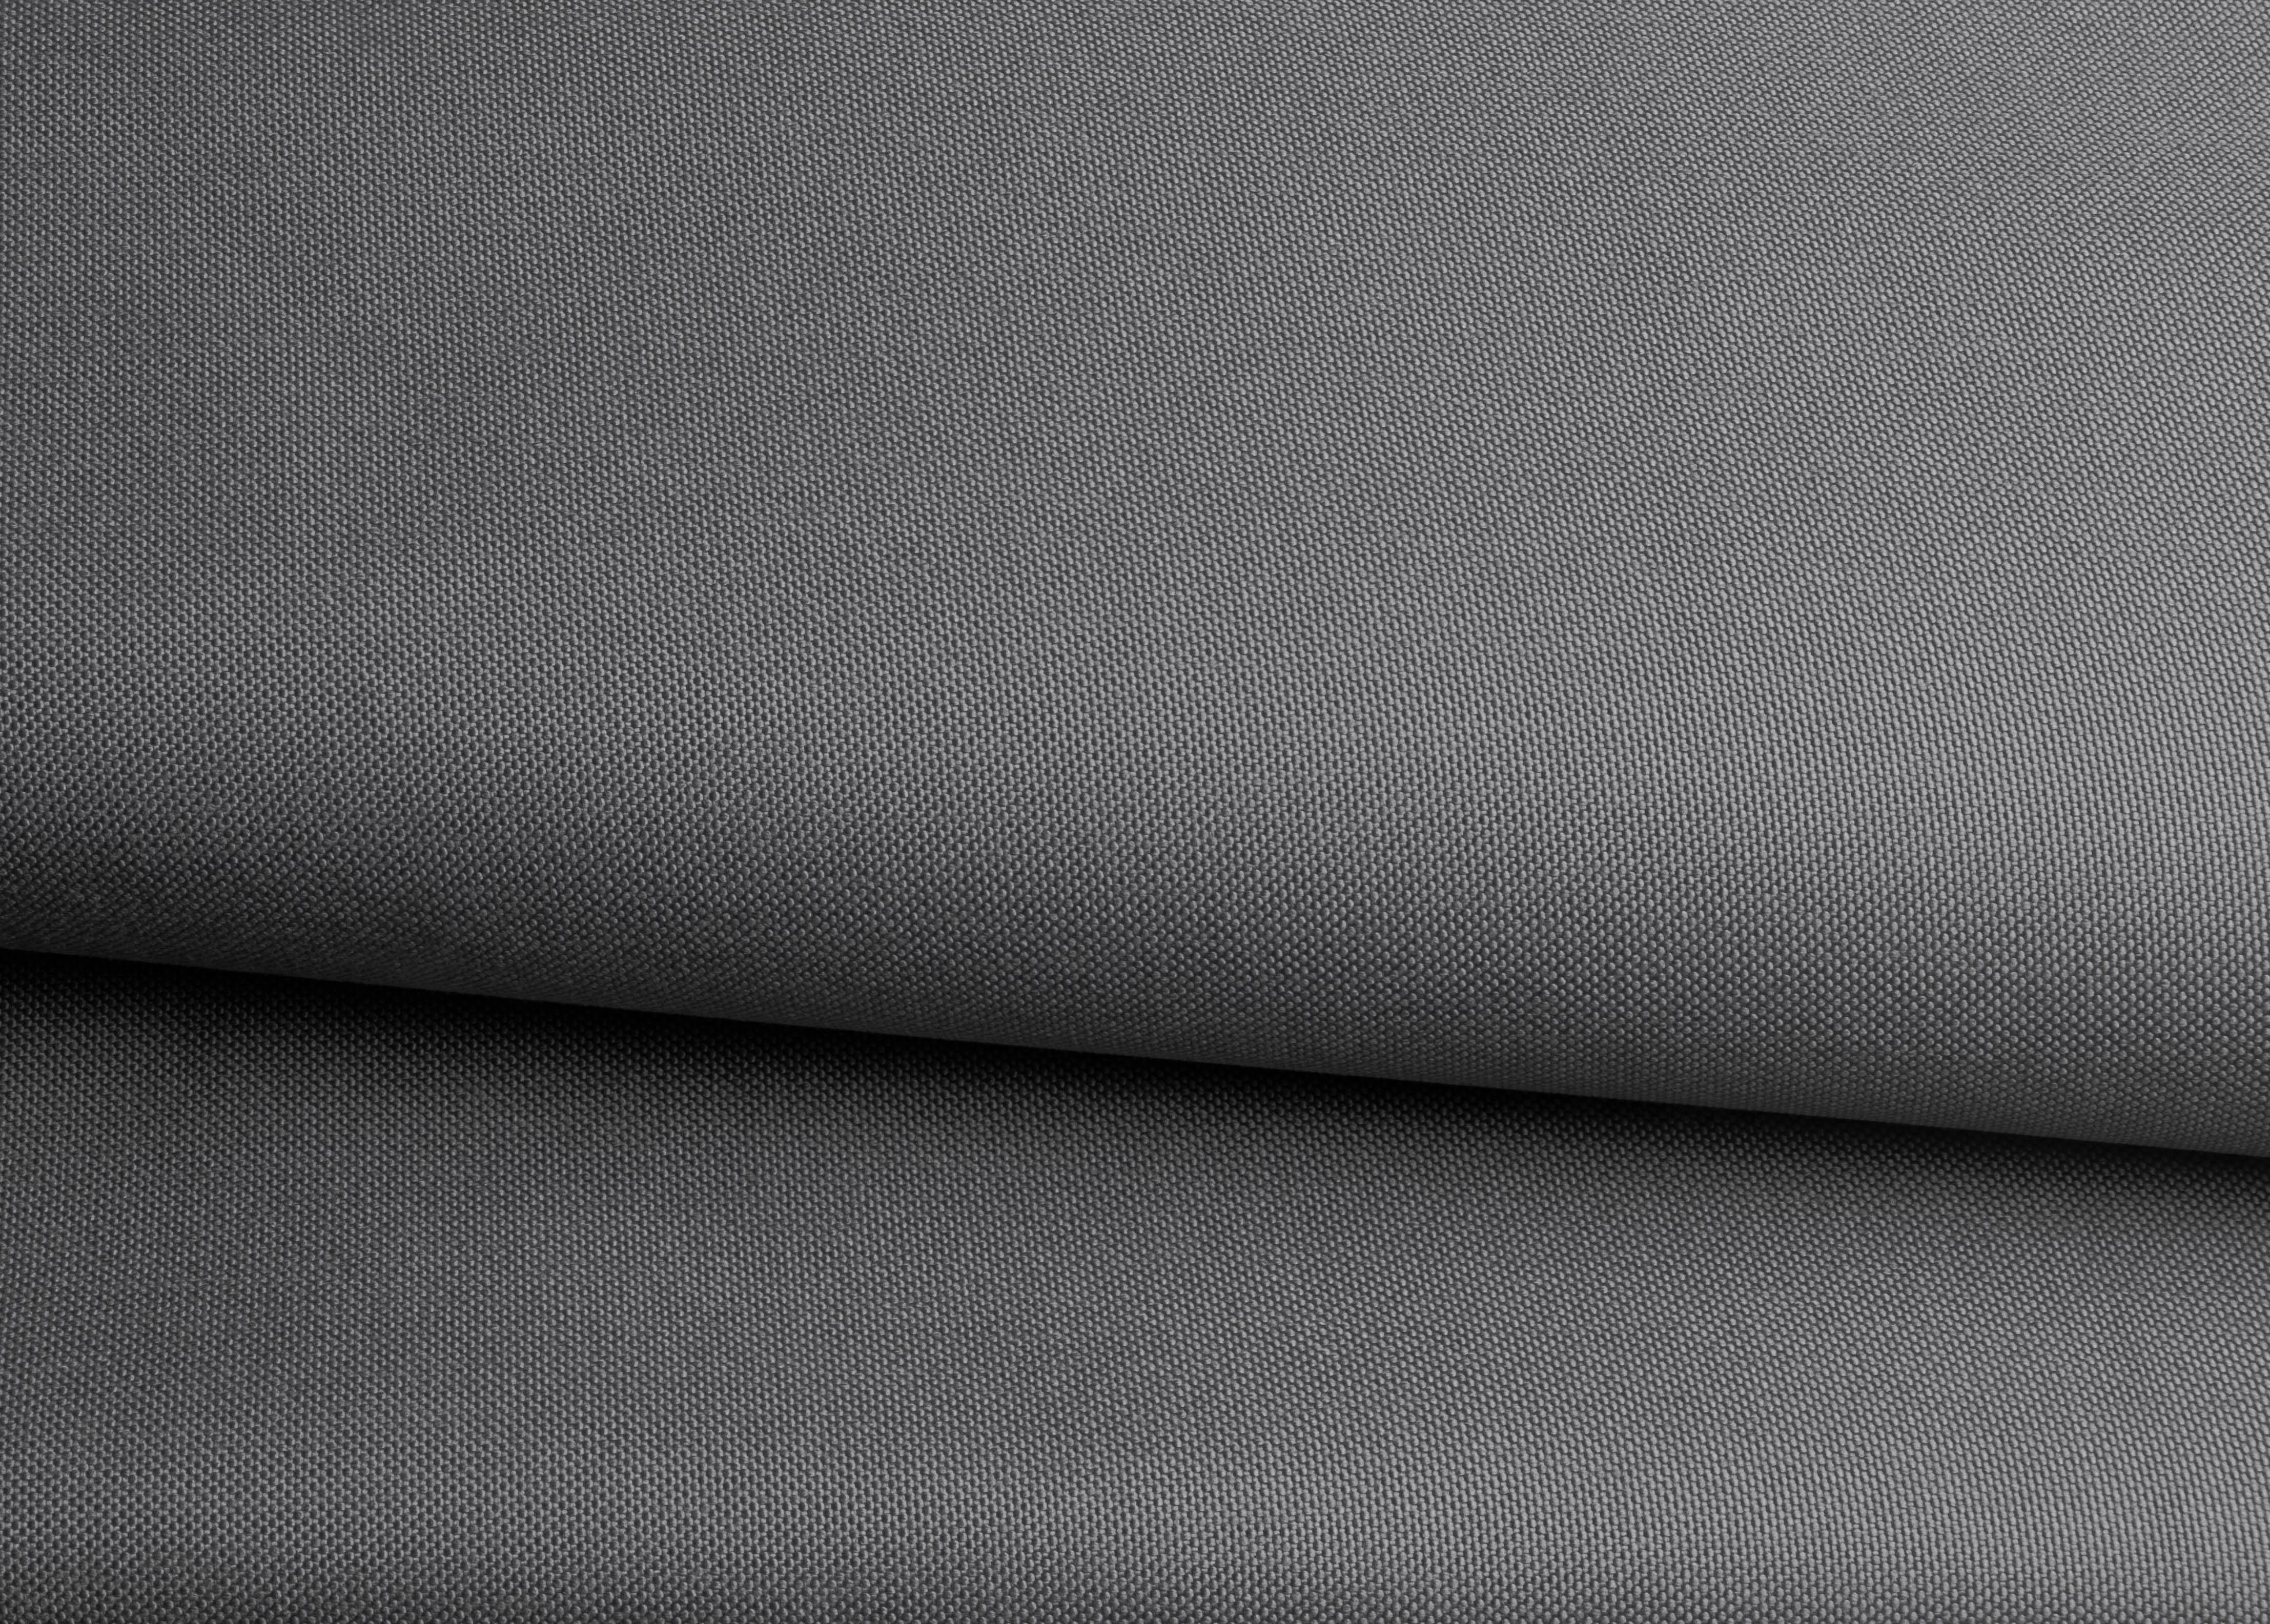 Sorrento Plain Grey Outdoor Fabric